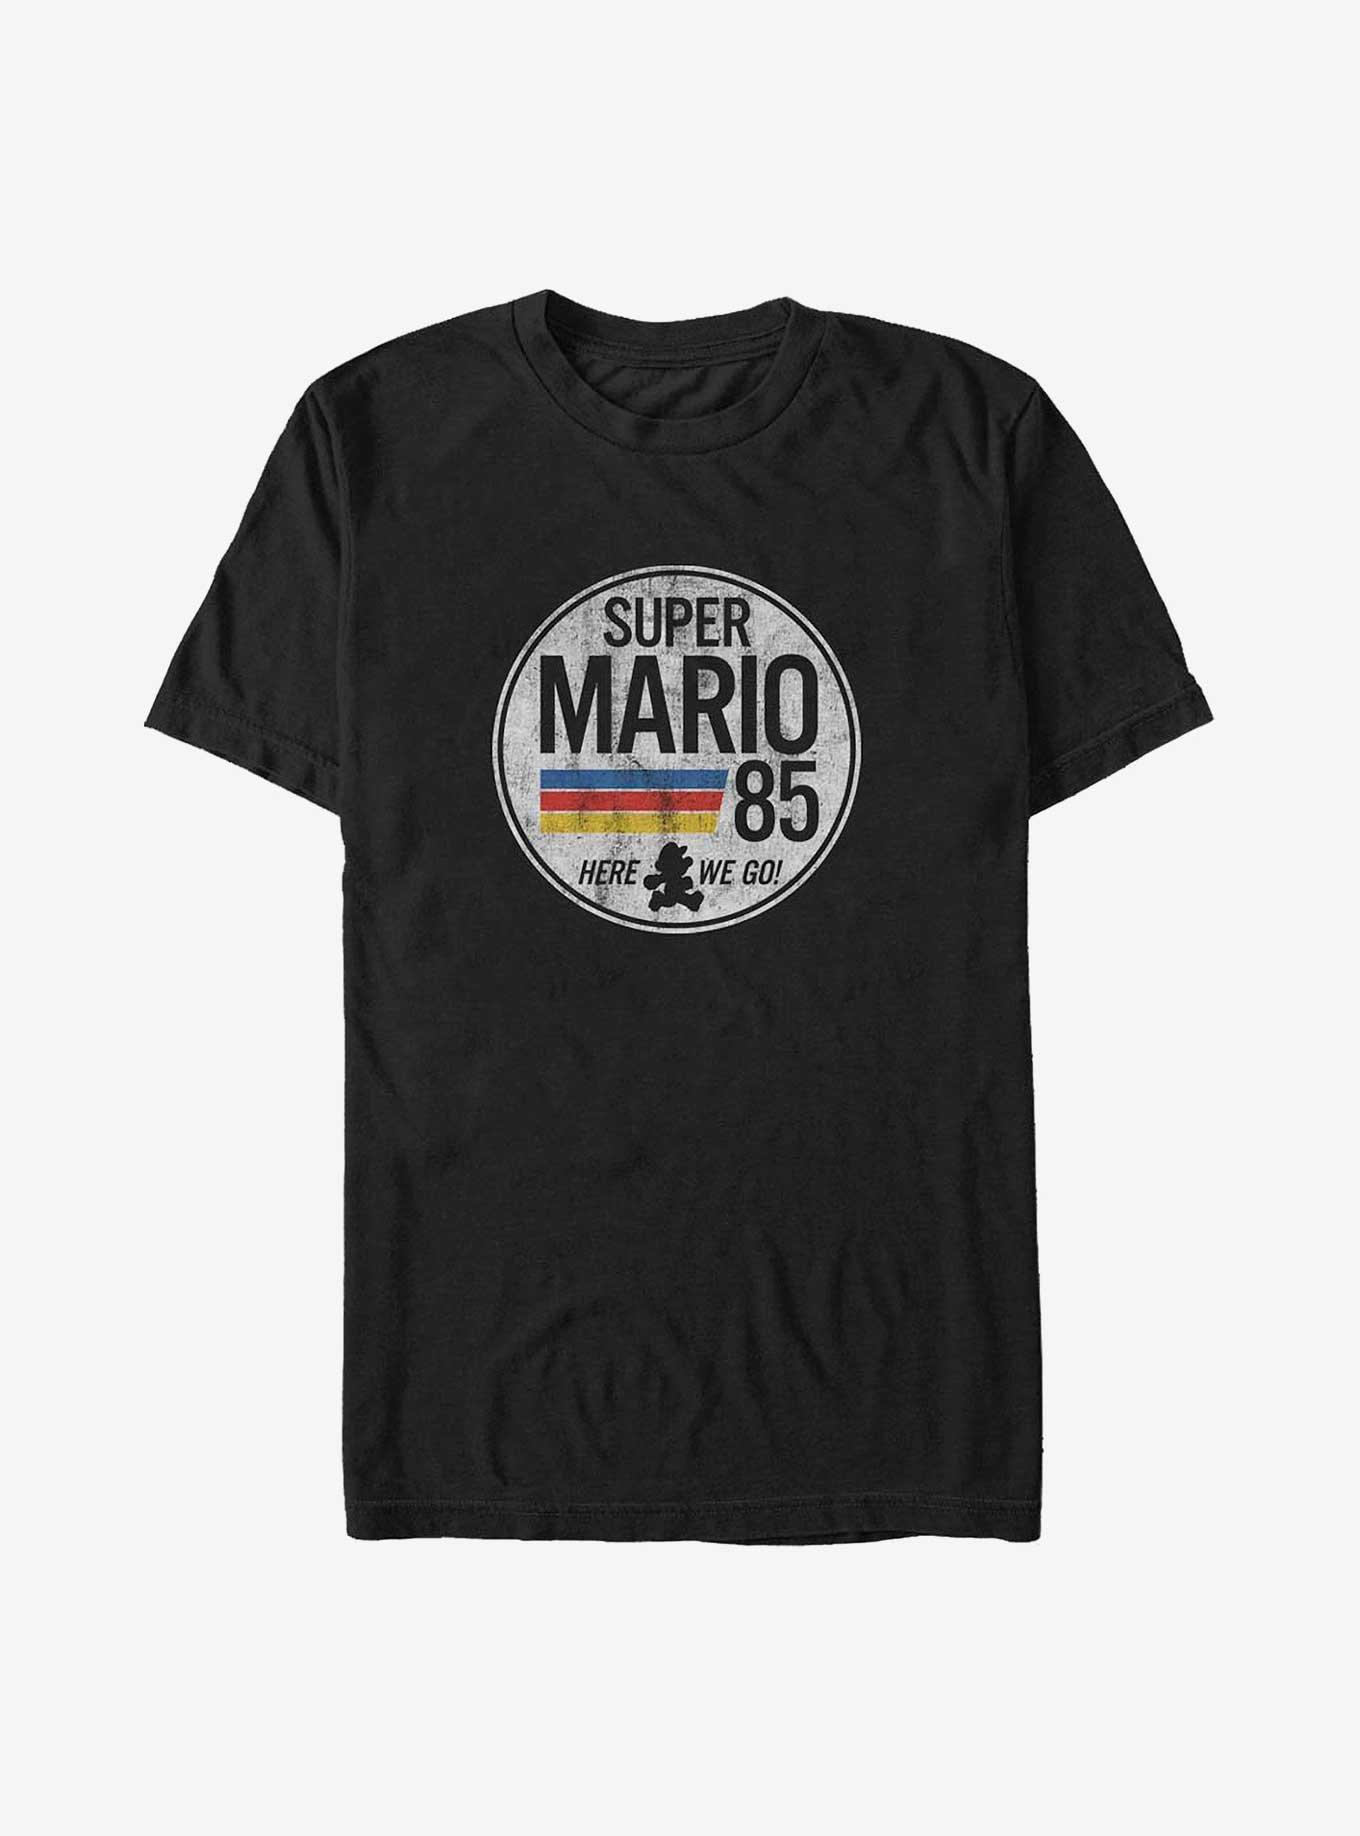 Mario '85 Here We Go Big & Tall T-Shirt